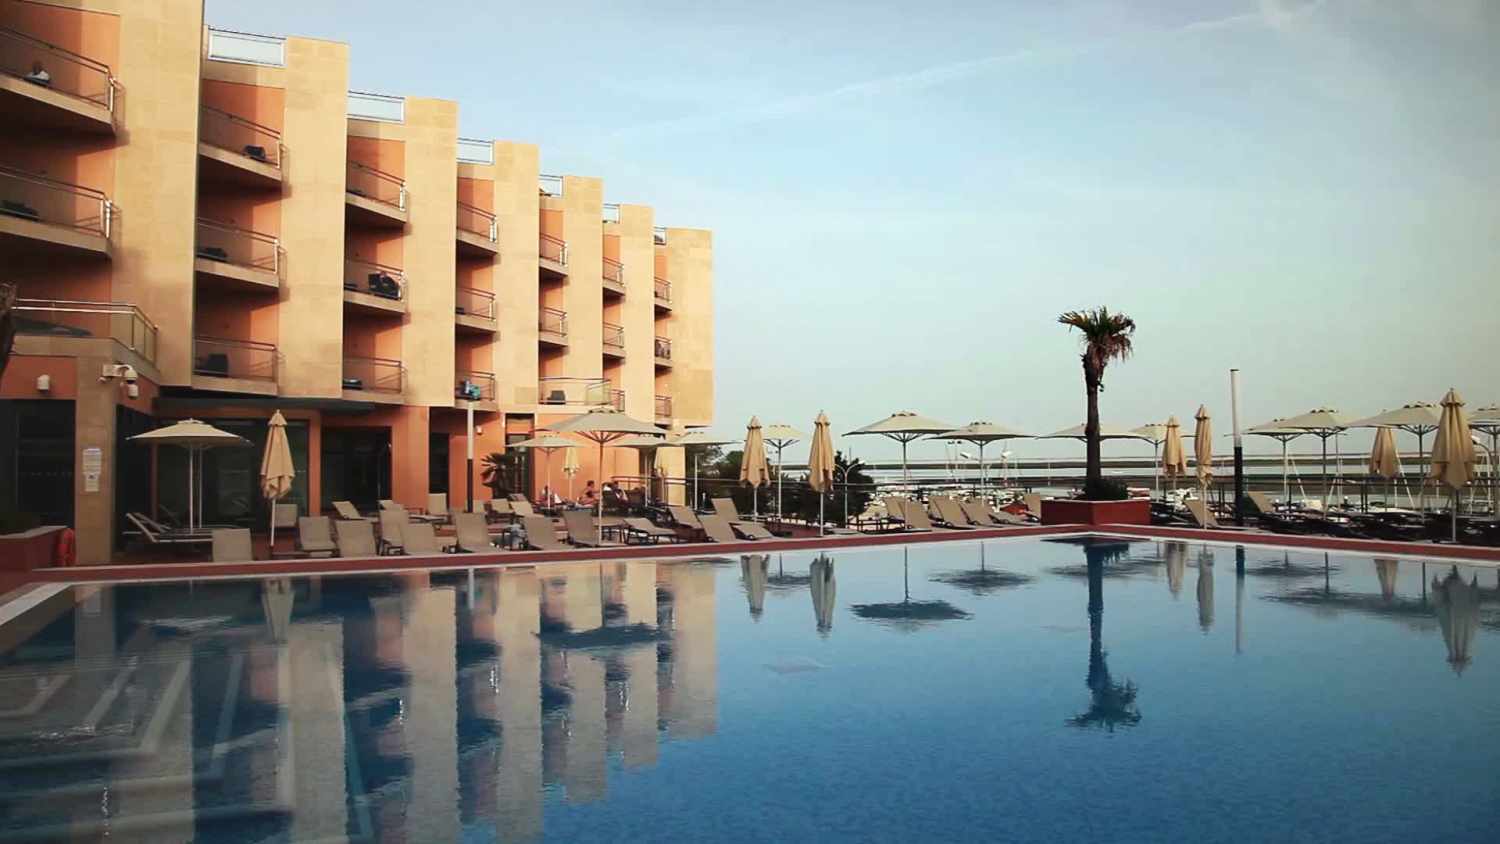 Real Marina Hotel & Spa, Olhao, Algarve, Portugal